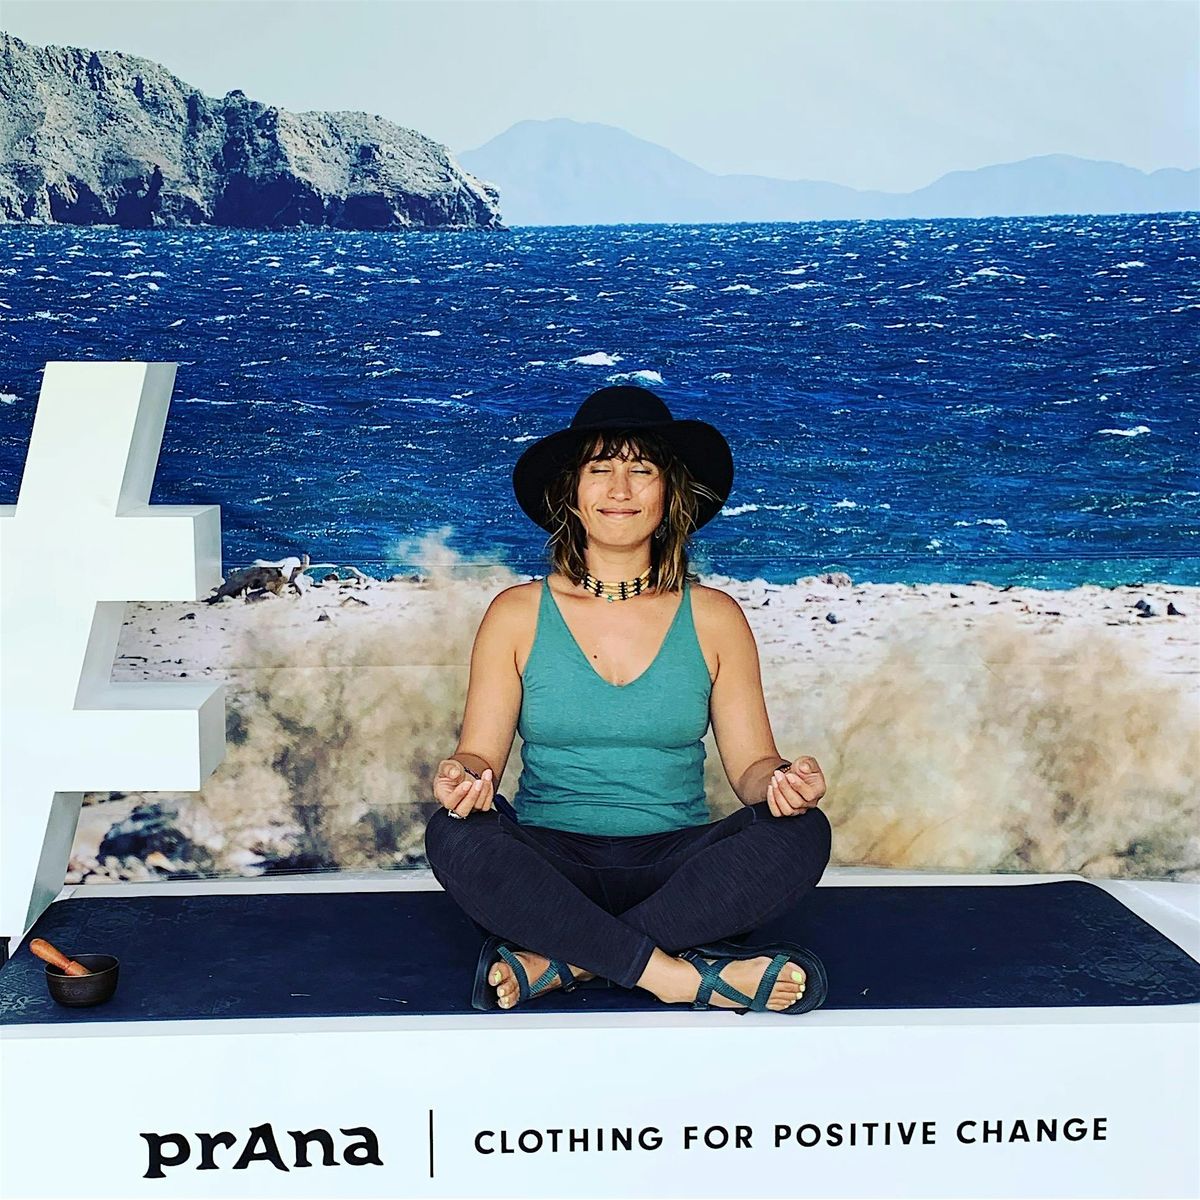 FREE Yin Yoga with Sasha at prAna Boulder